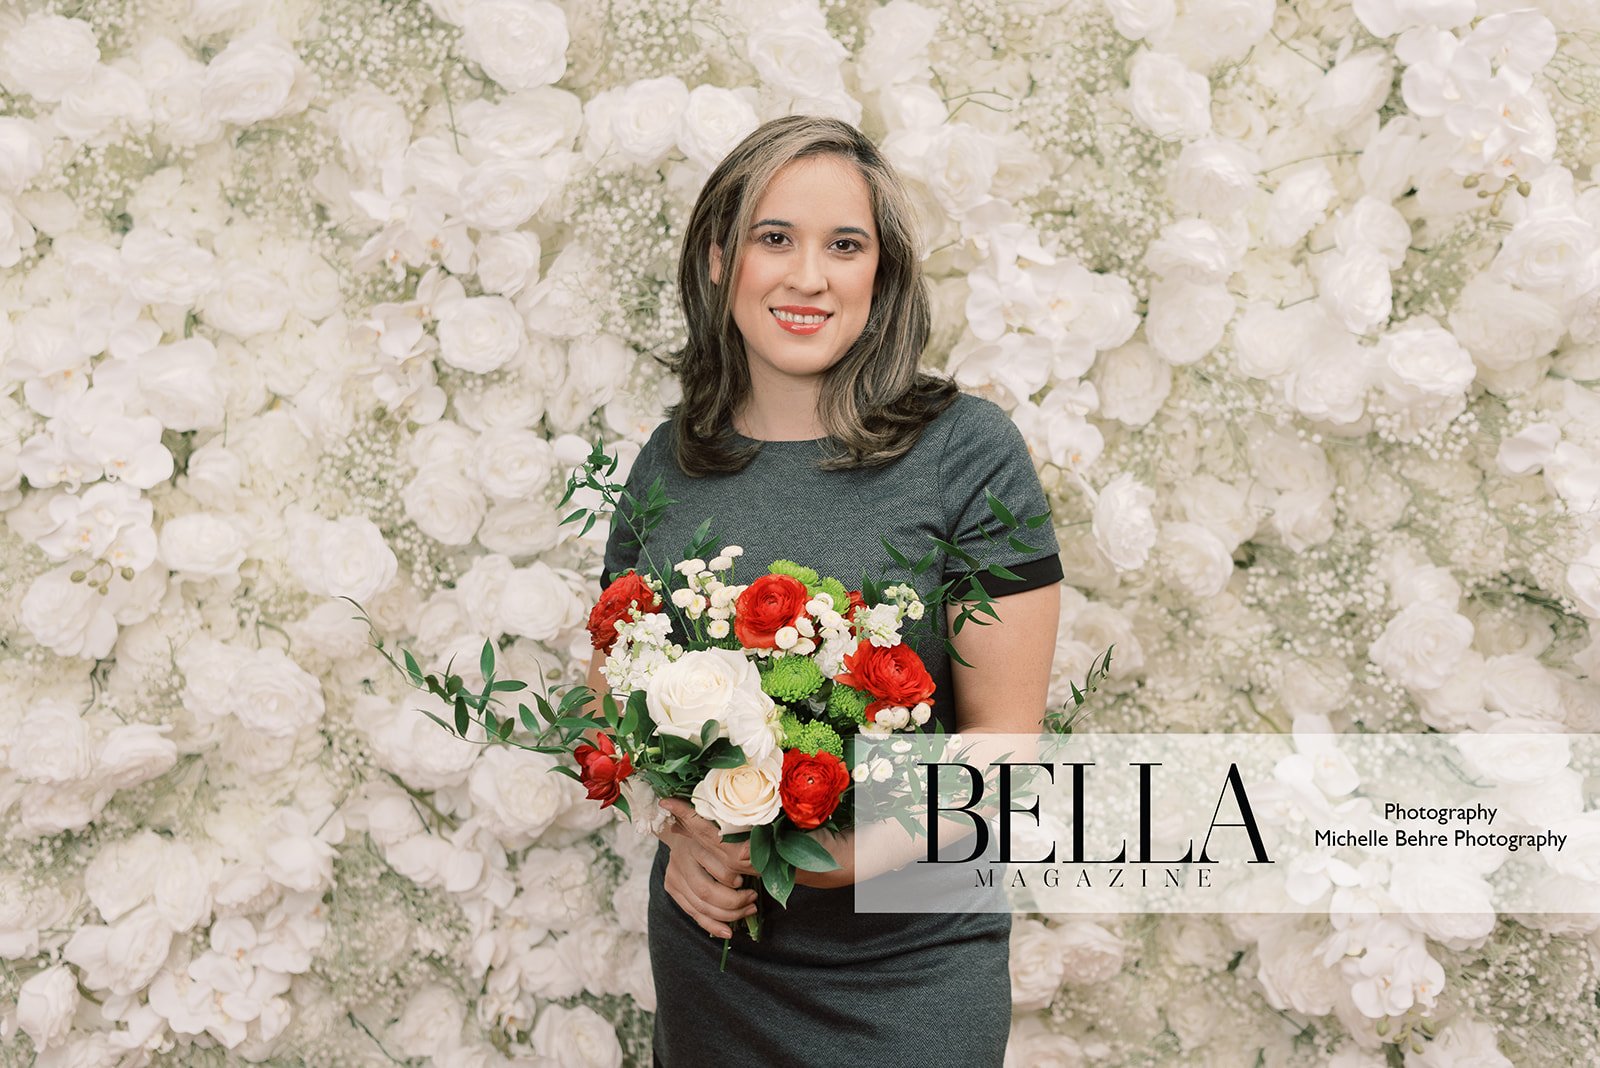 Michelle-Behre-Photography-BELLA-Magazine-Wedding-Event-La-Pulperia-New-York-9.jpg